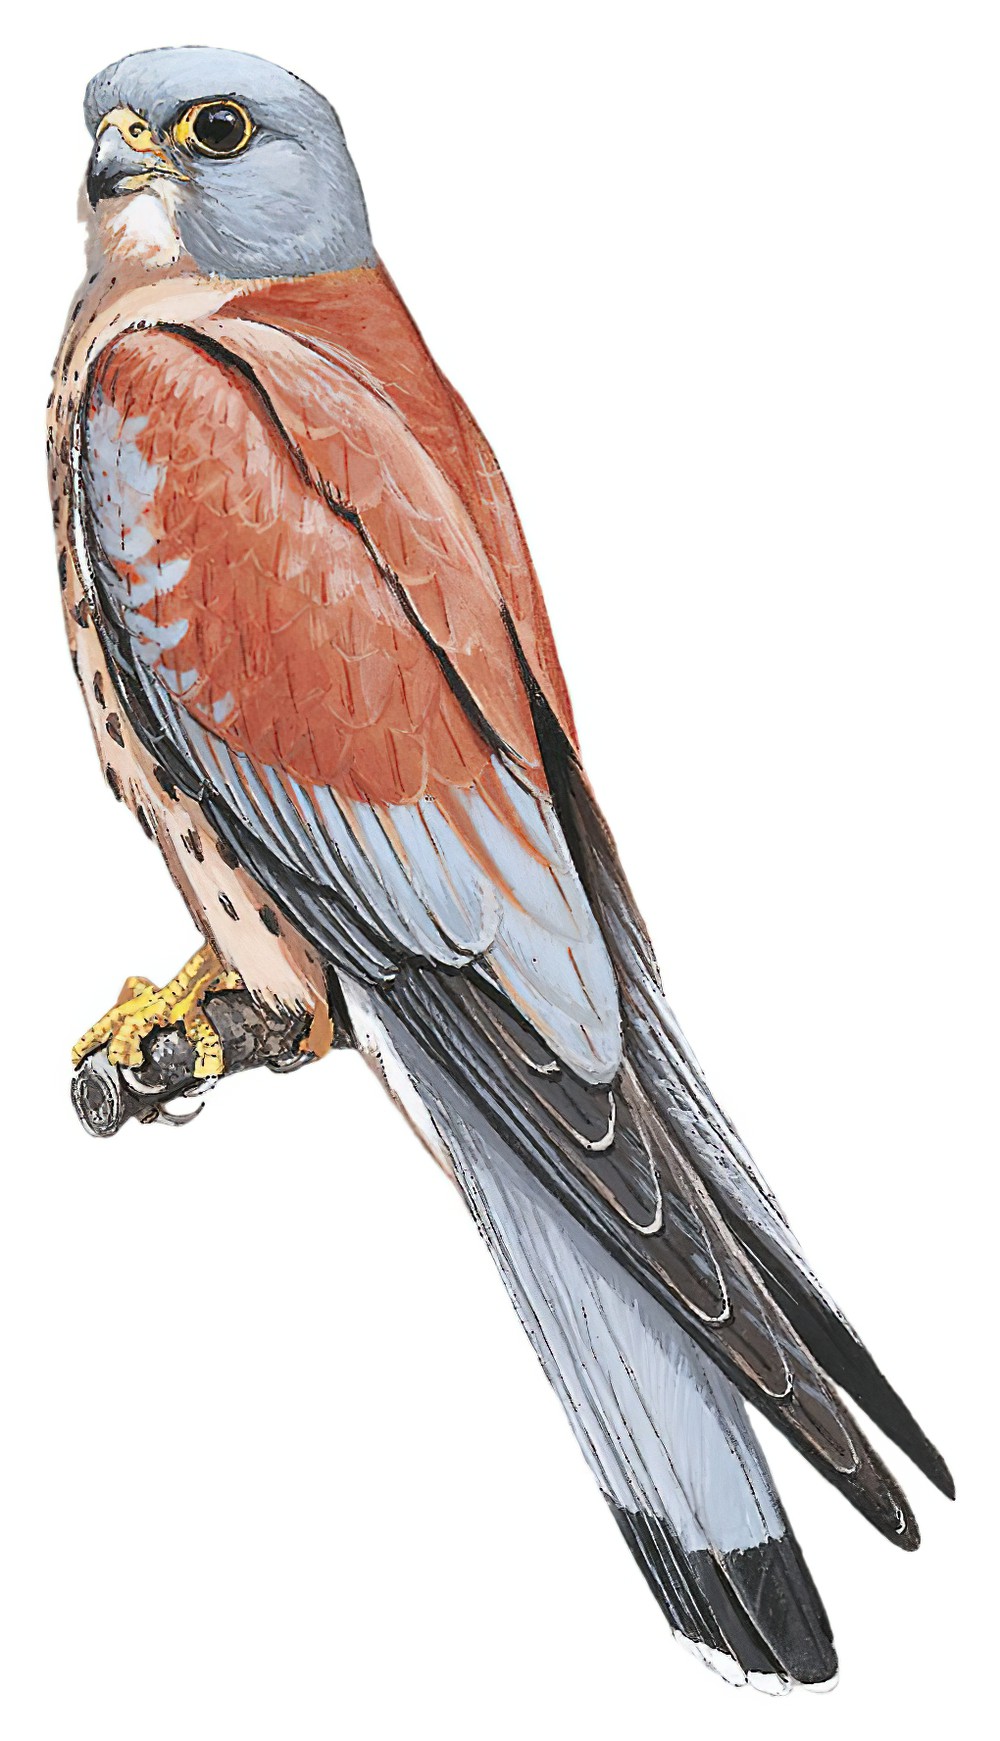 Lesser Kestrel / Falco naumanni